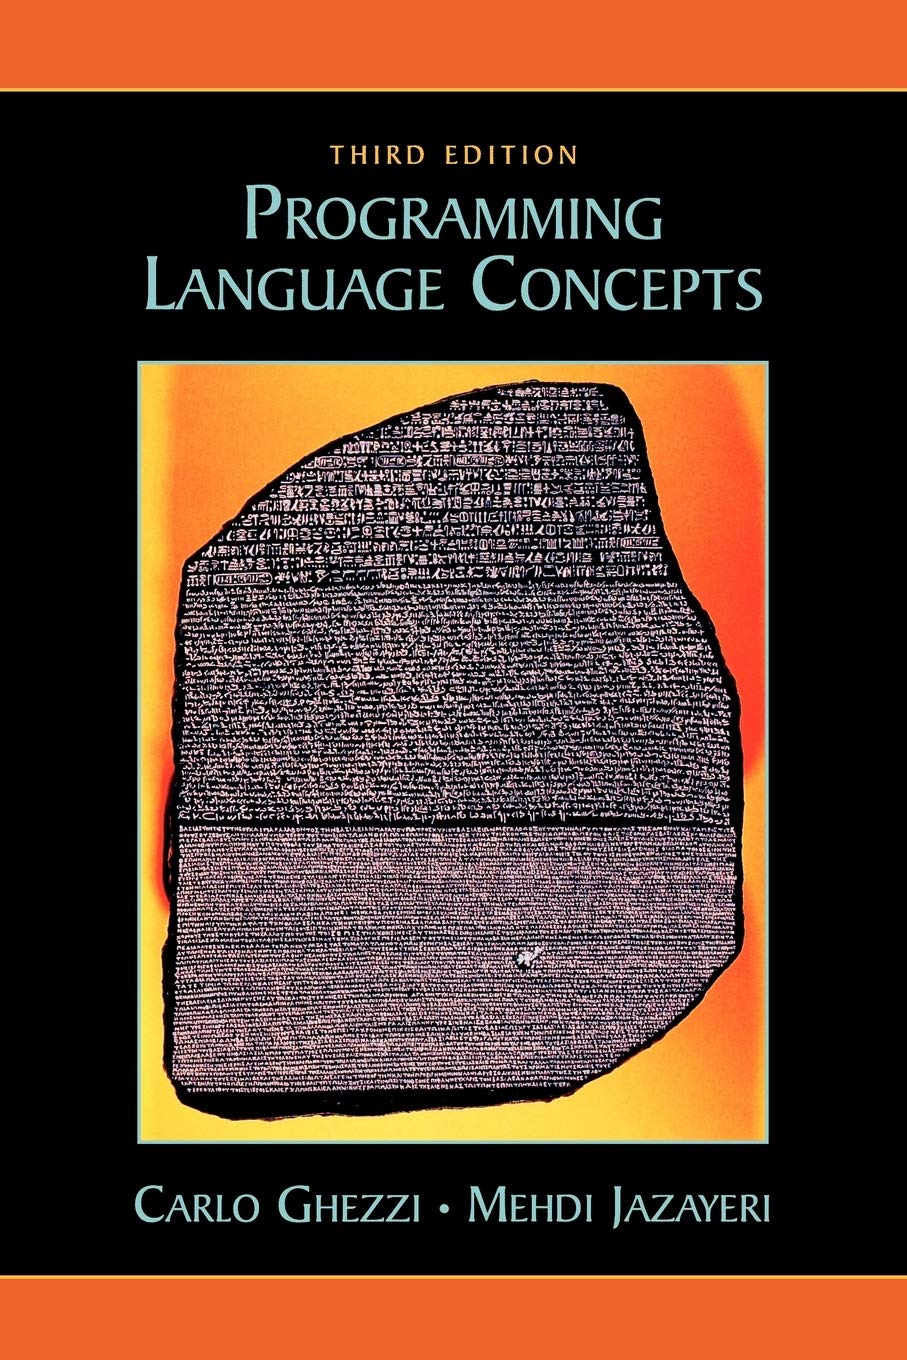 Programming Language Concepts (1997, Ghezzi)